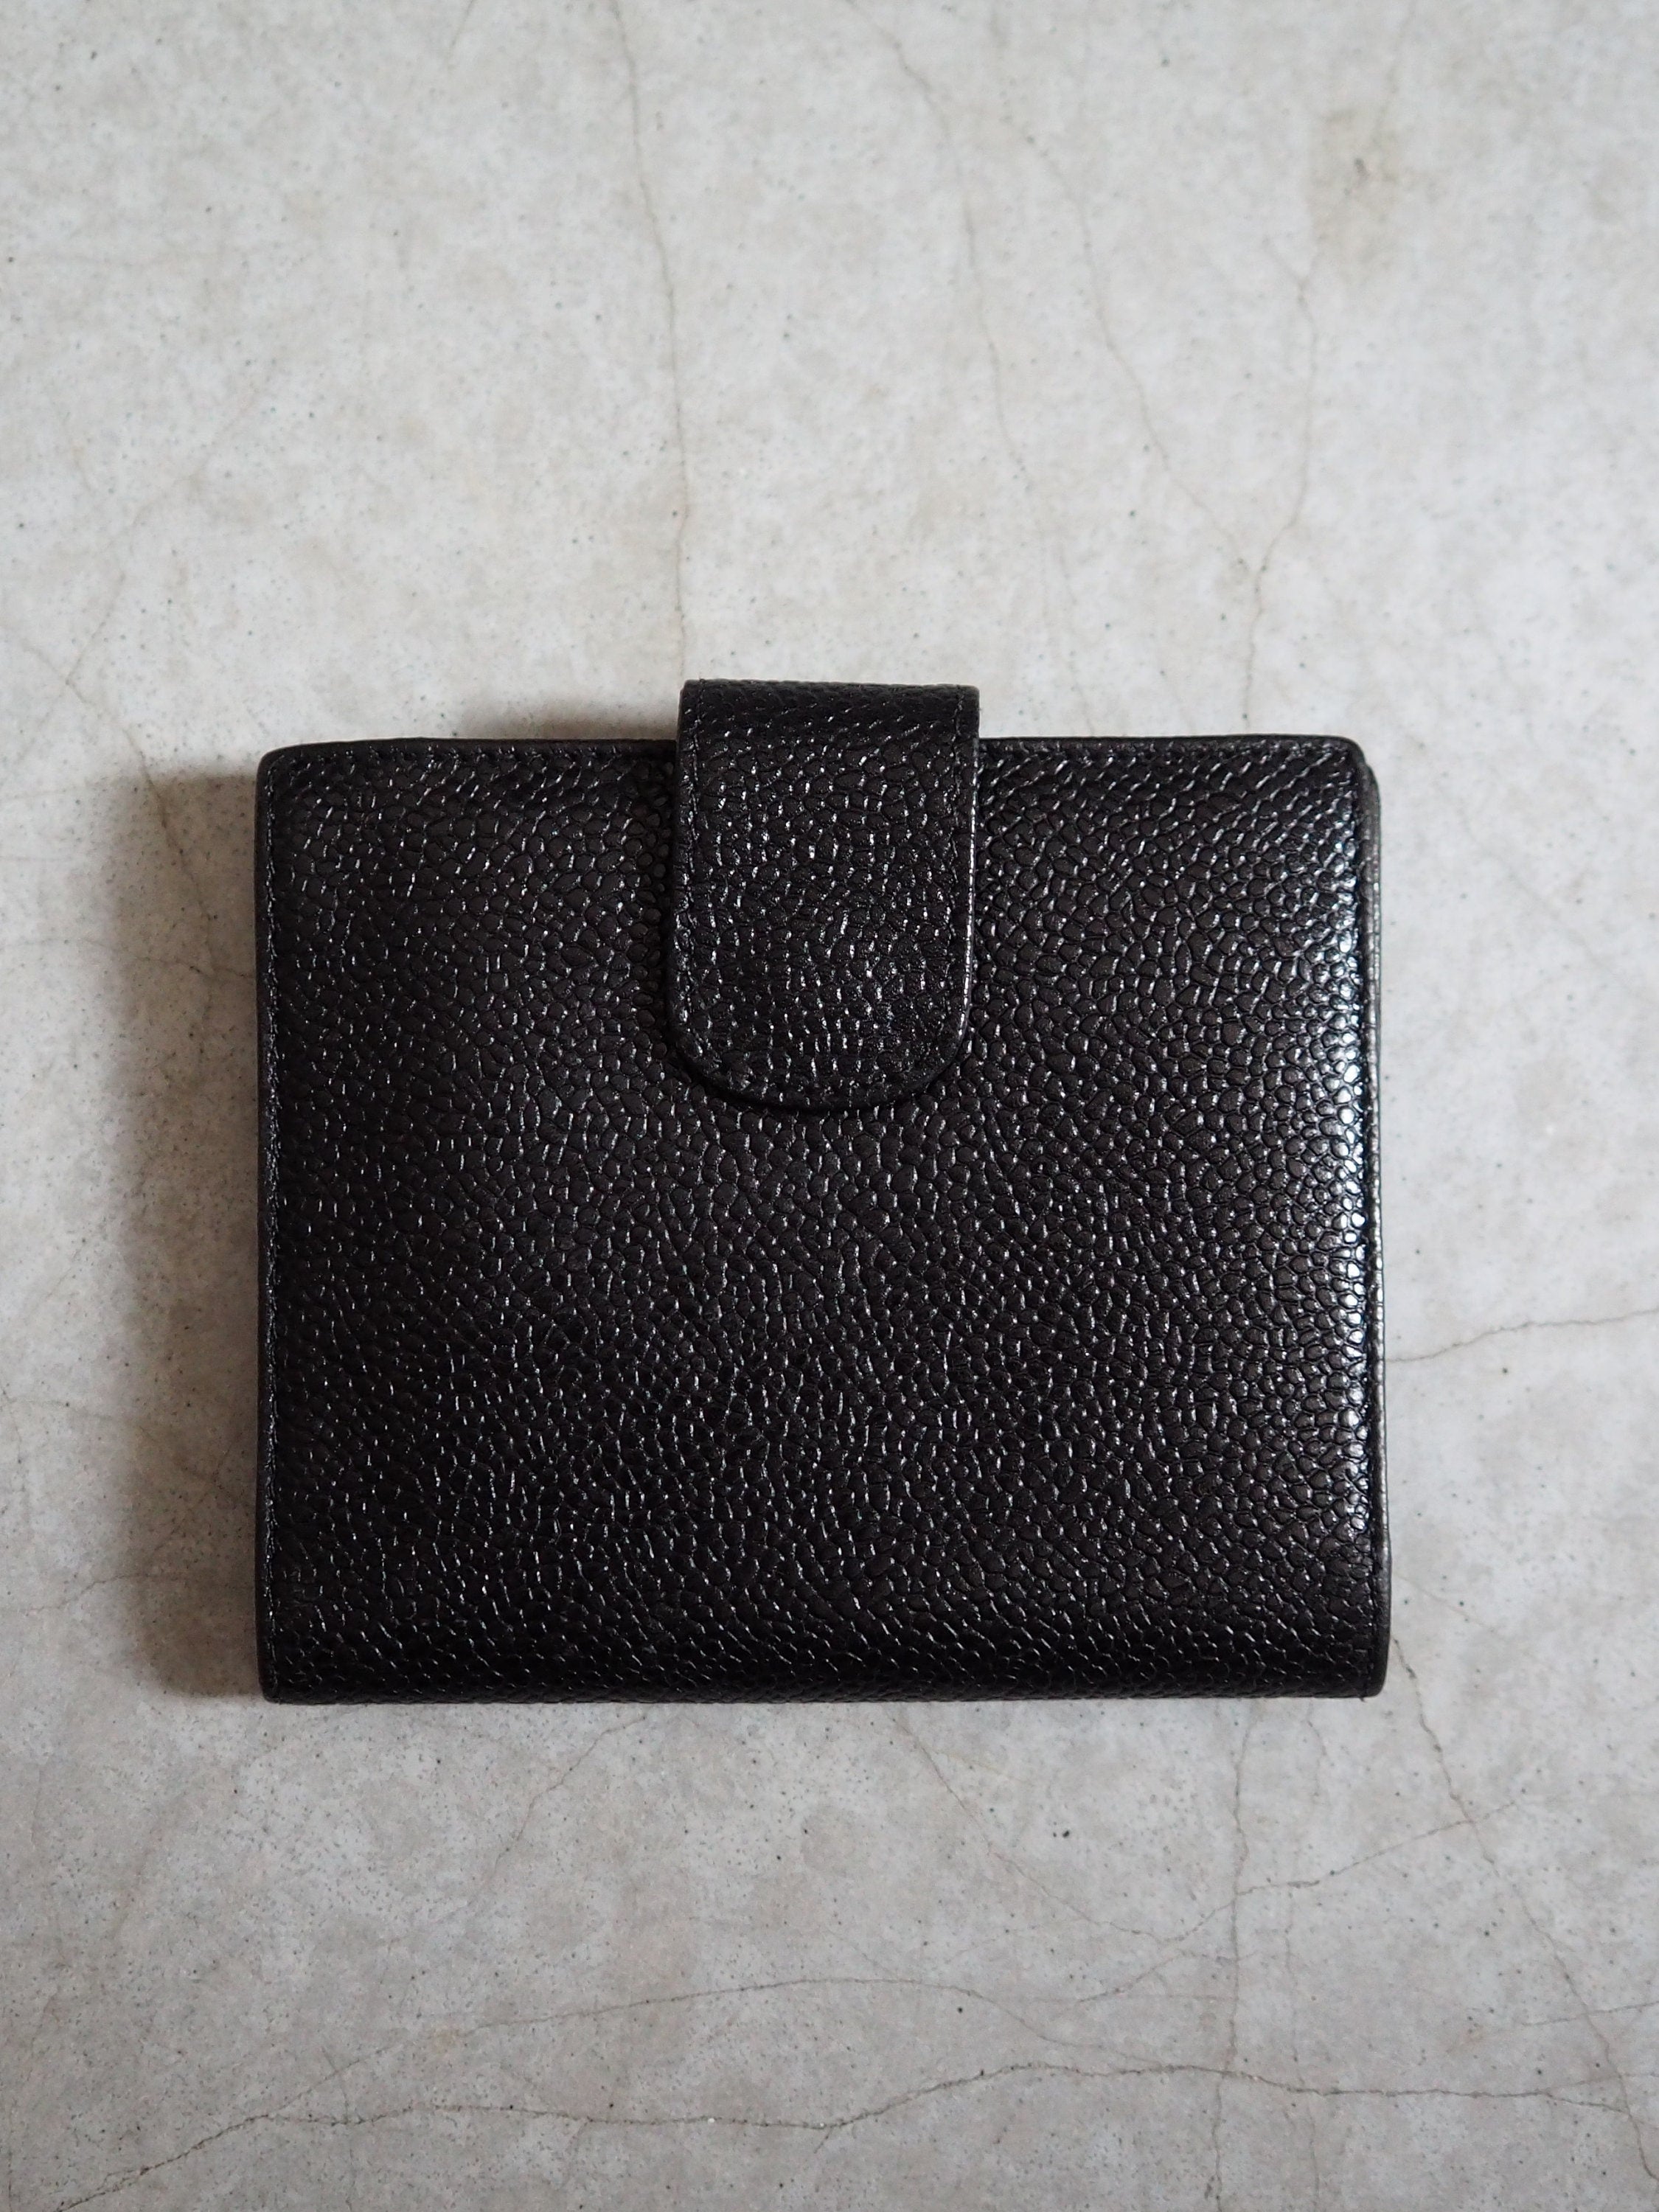 CHANEL Wallet Compact Purse Caviar Skin CC Leather Black Authentic Vintage